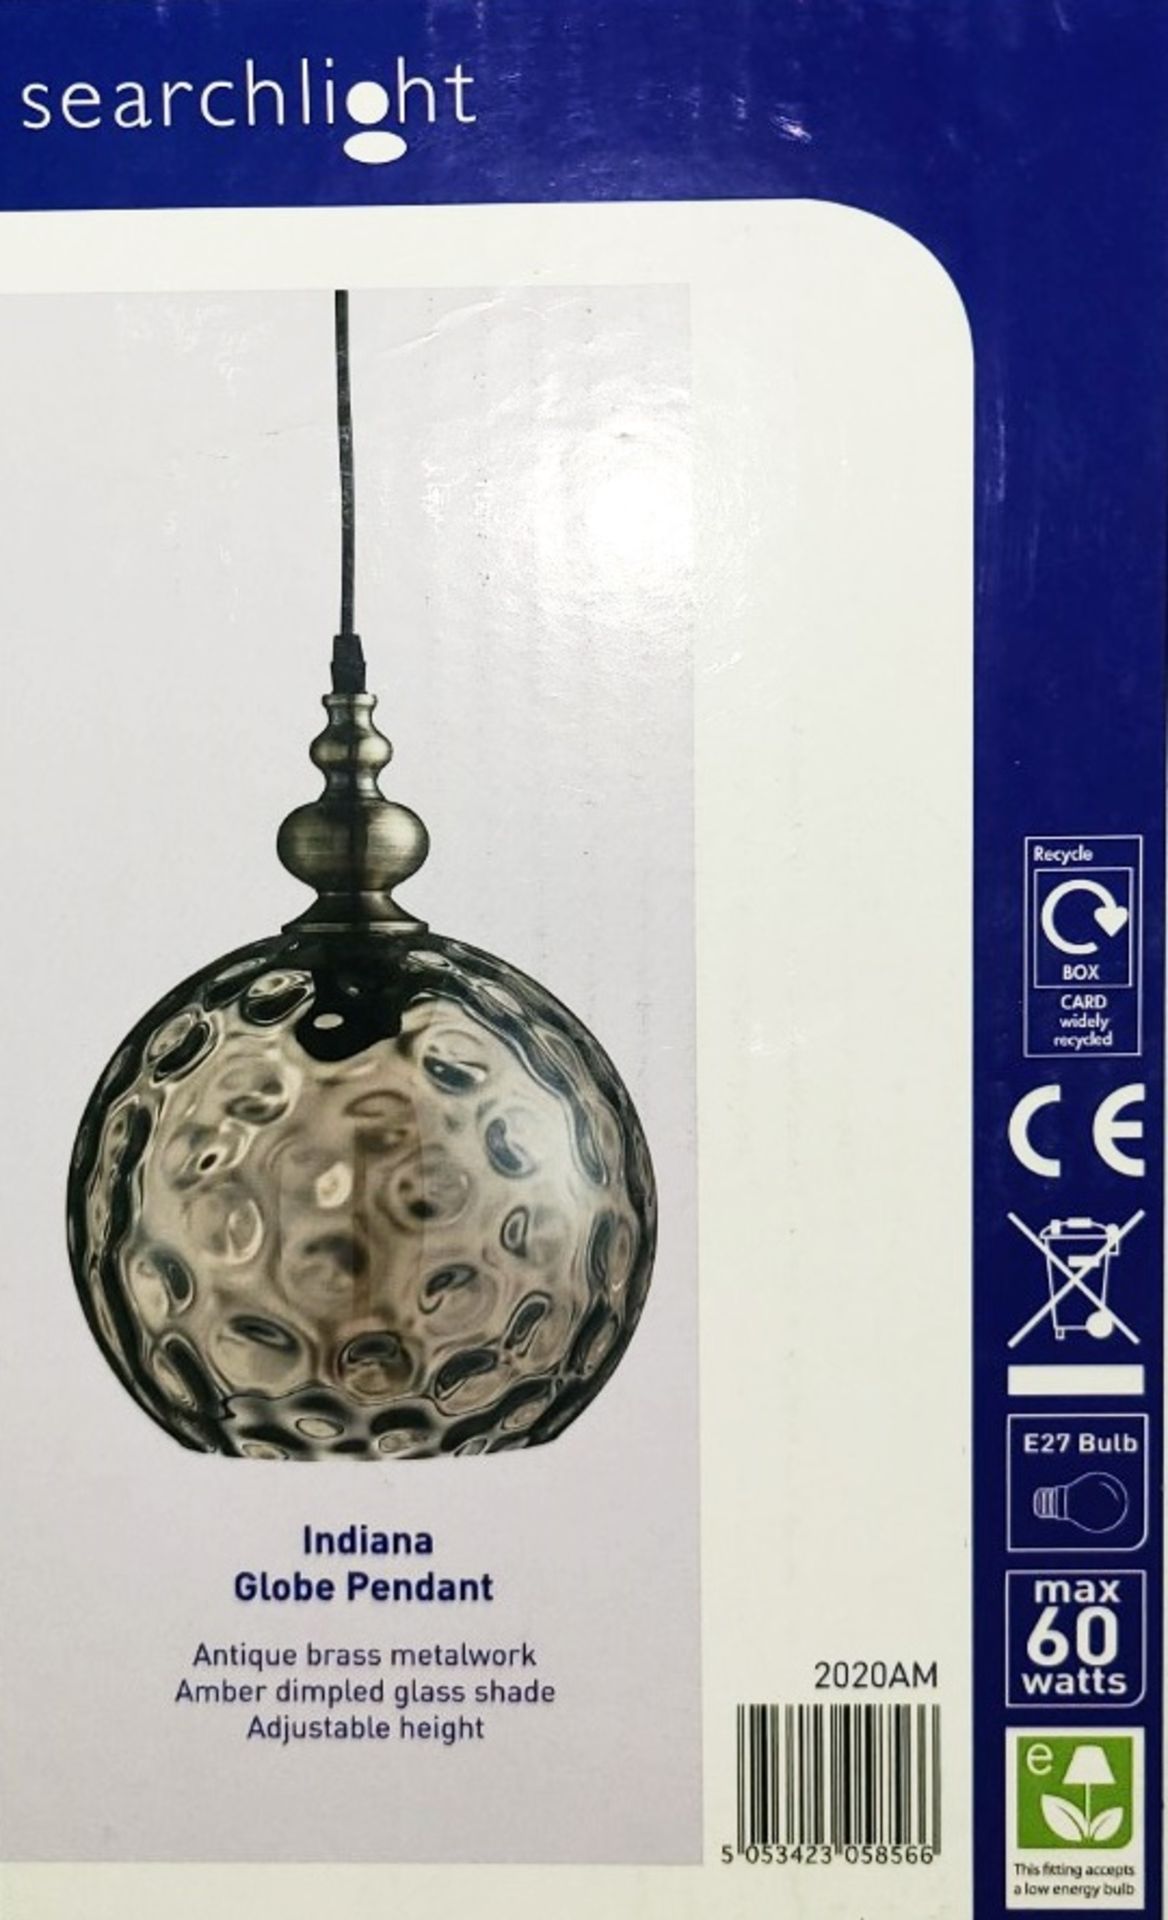 1 x SEARCHLIGHT Indiana Single Light Ceiling Pendant With Globe Glass Shade & Satin Chrome Finish